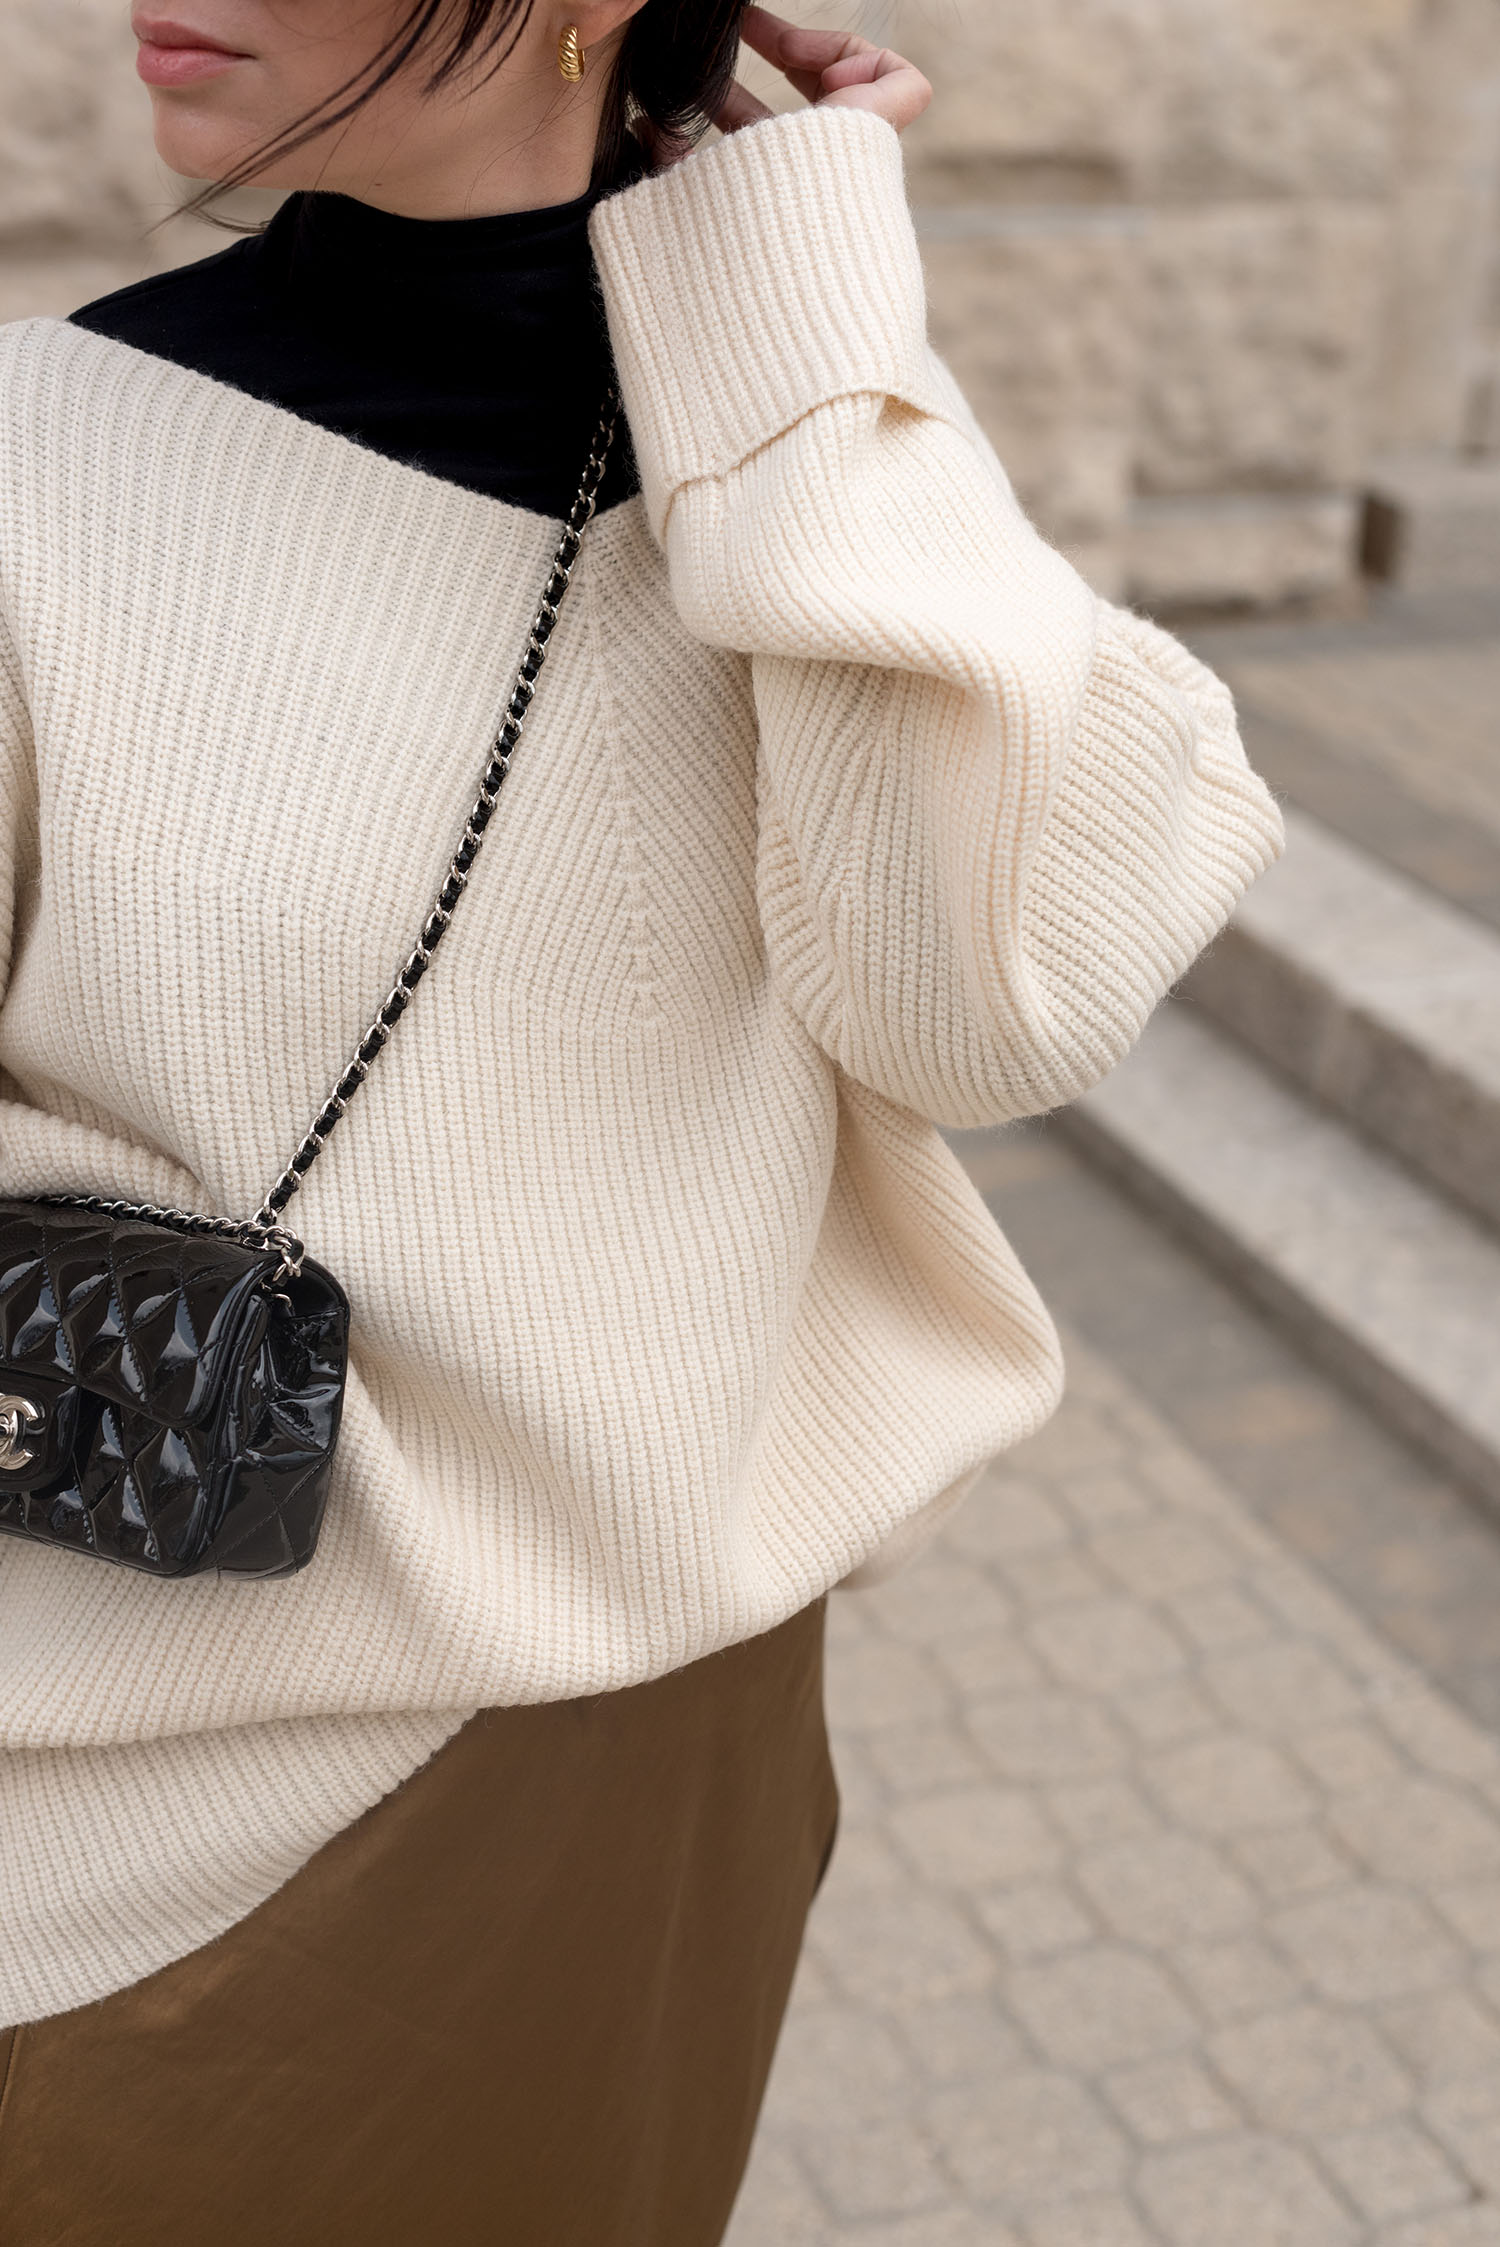 Coco & Vera - Mejuri croissant earrings, Chanel mini handbag, Oak + Fort sweater